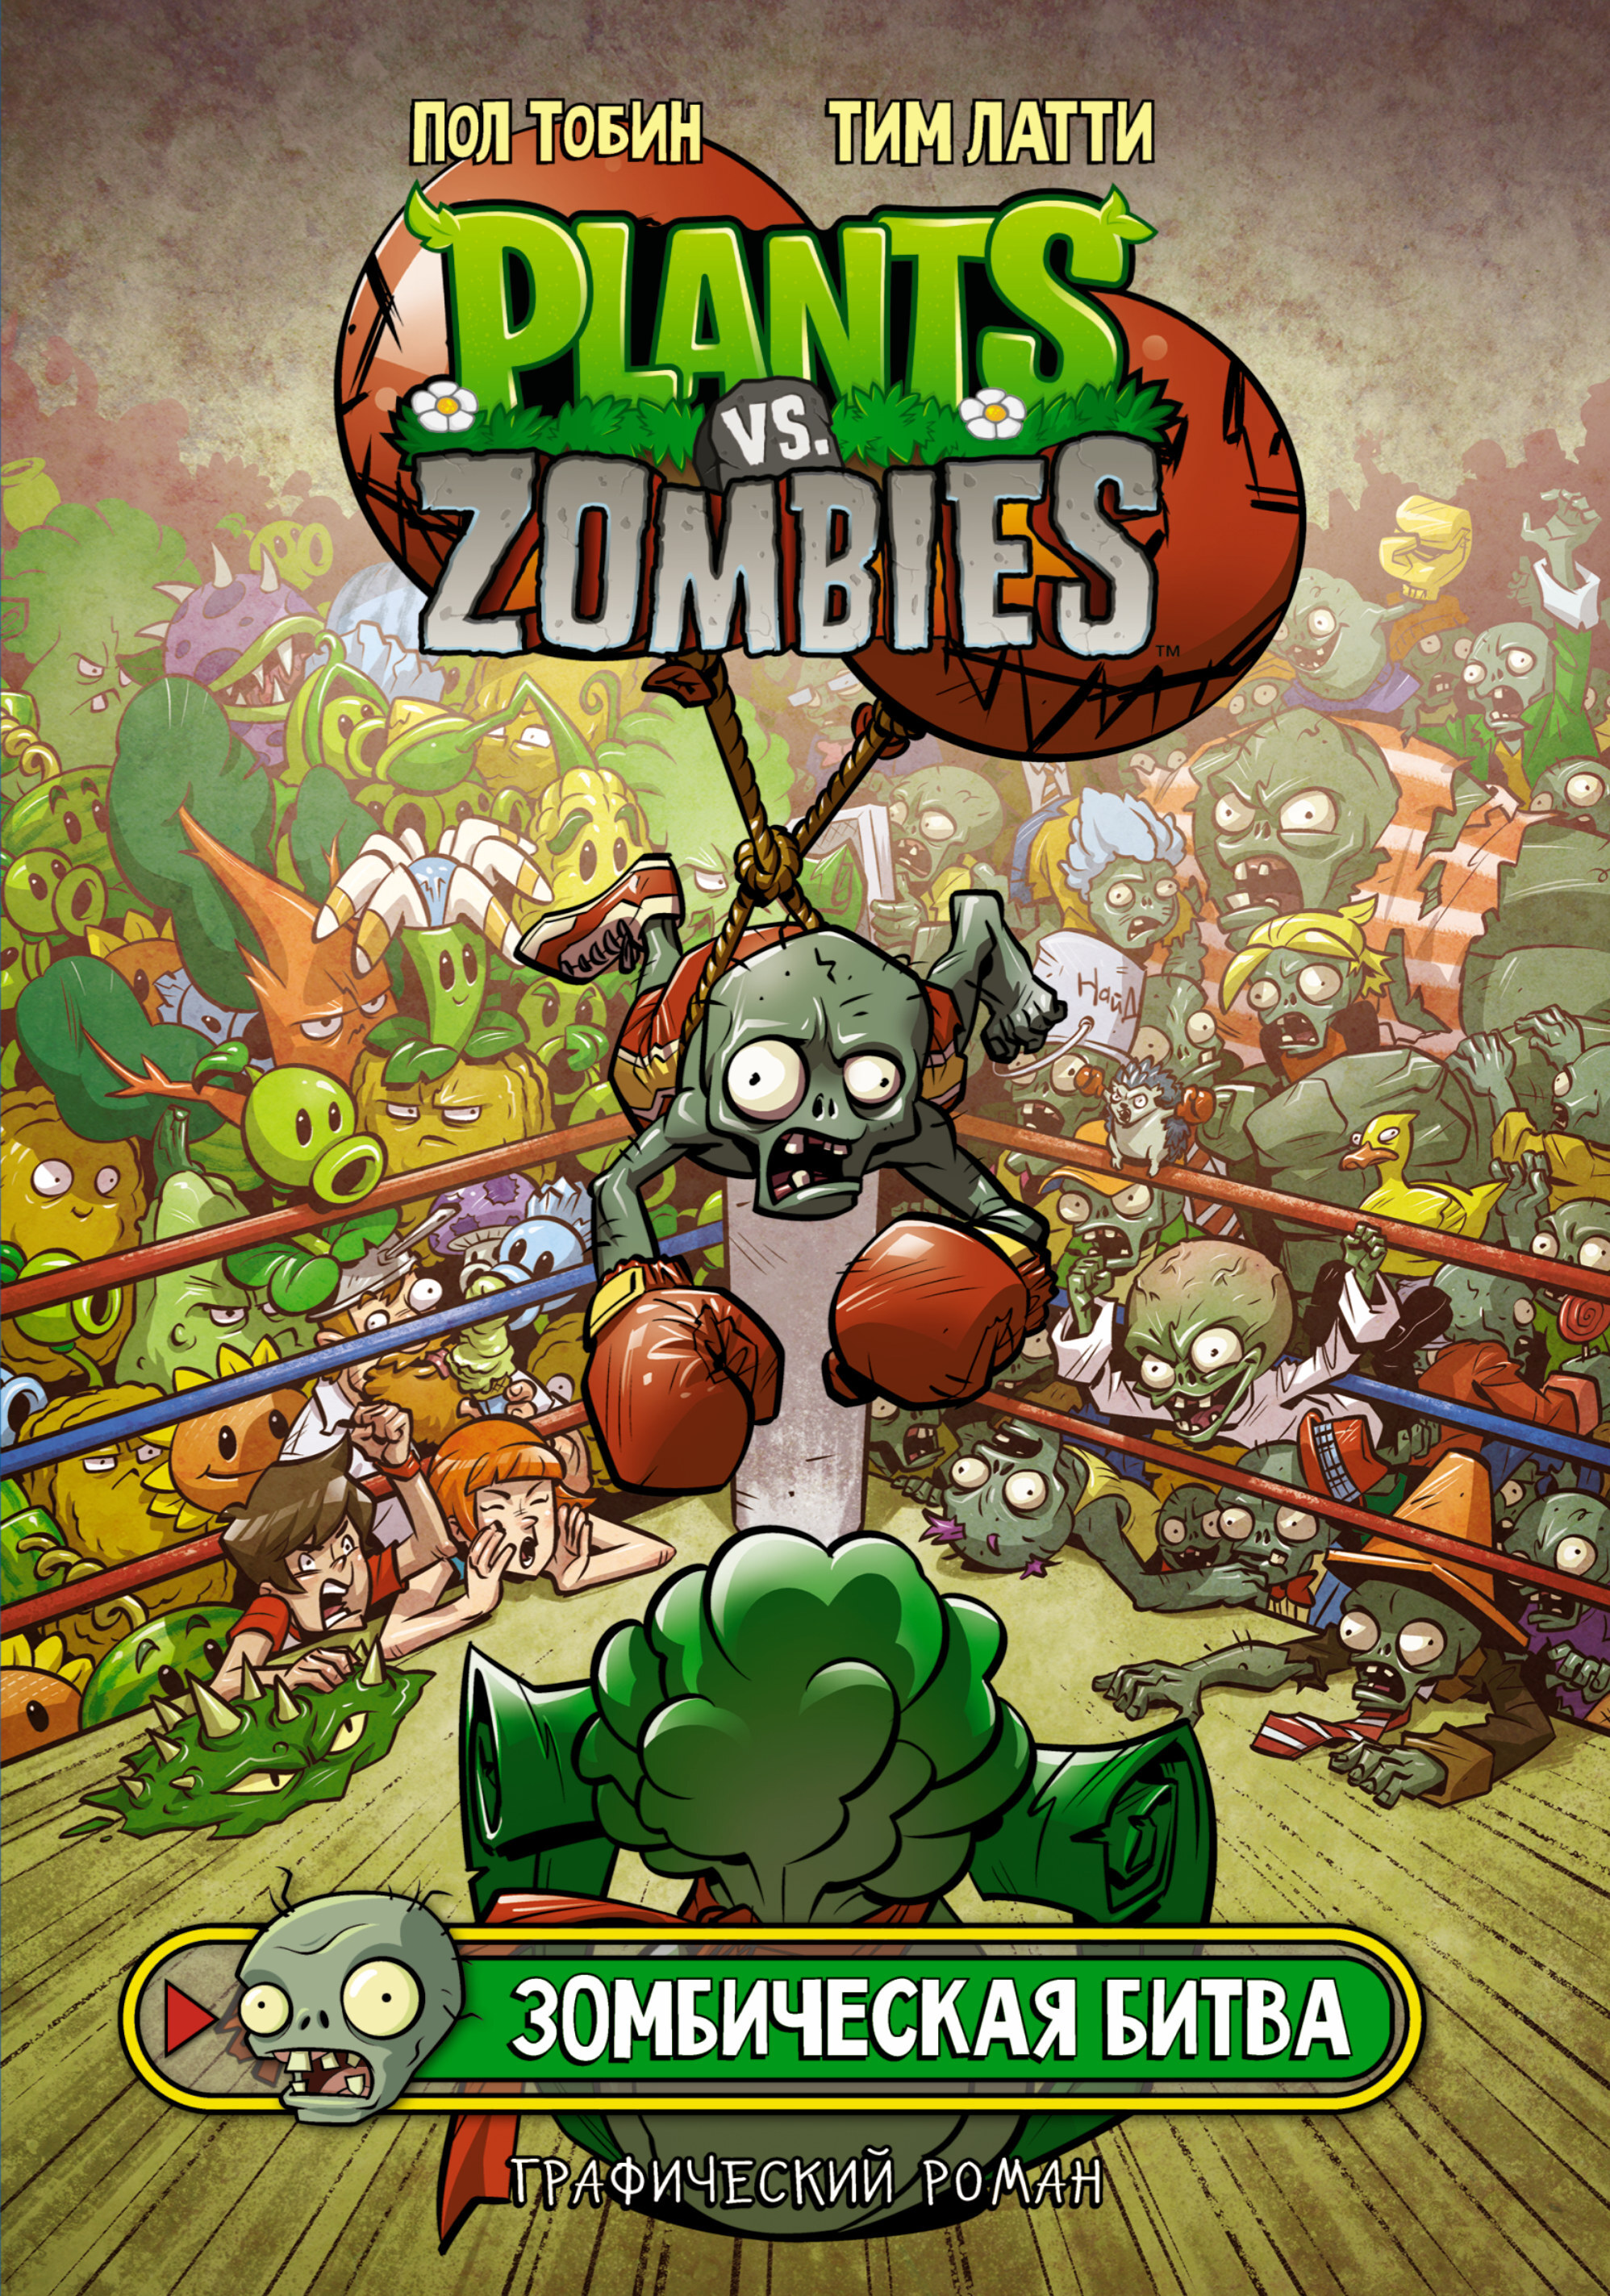 Zombie vs plants в стиме фото 82